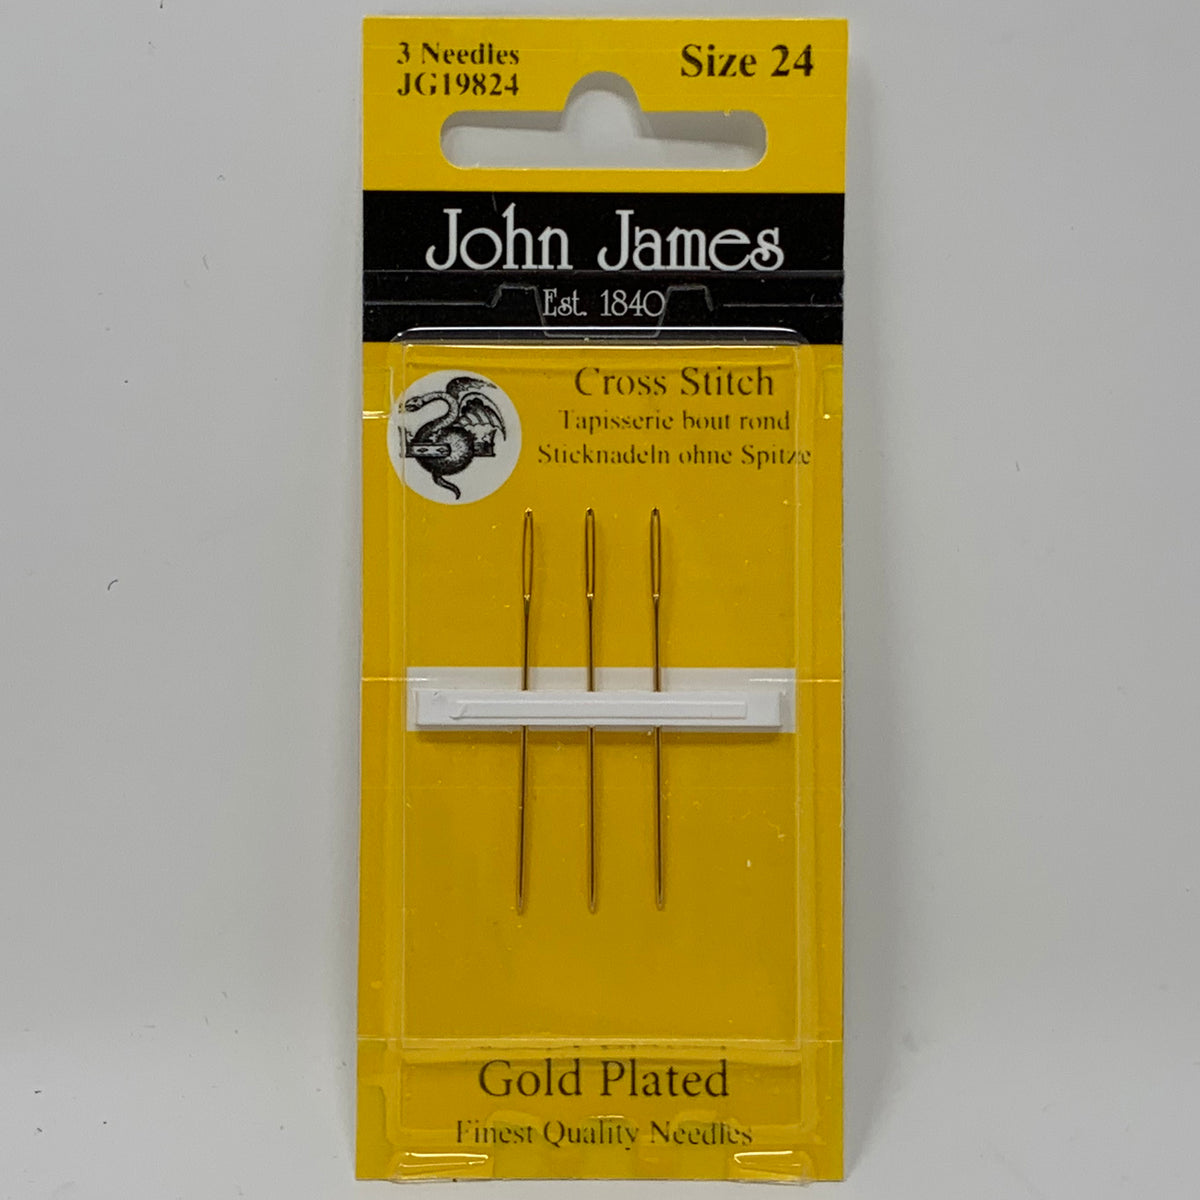 John James Size 24 Cross Stitch Needles | John James #JG198-24